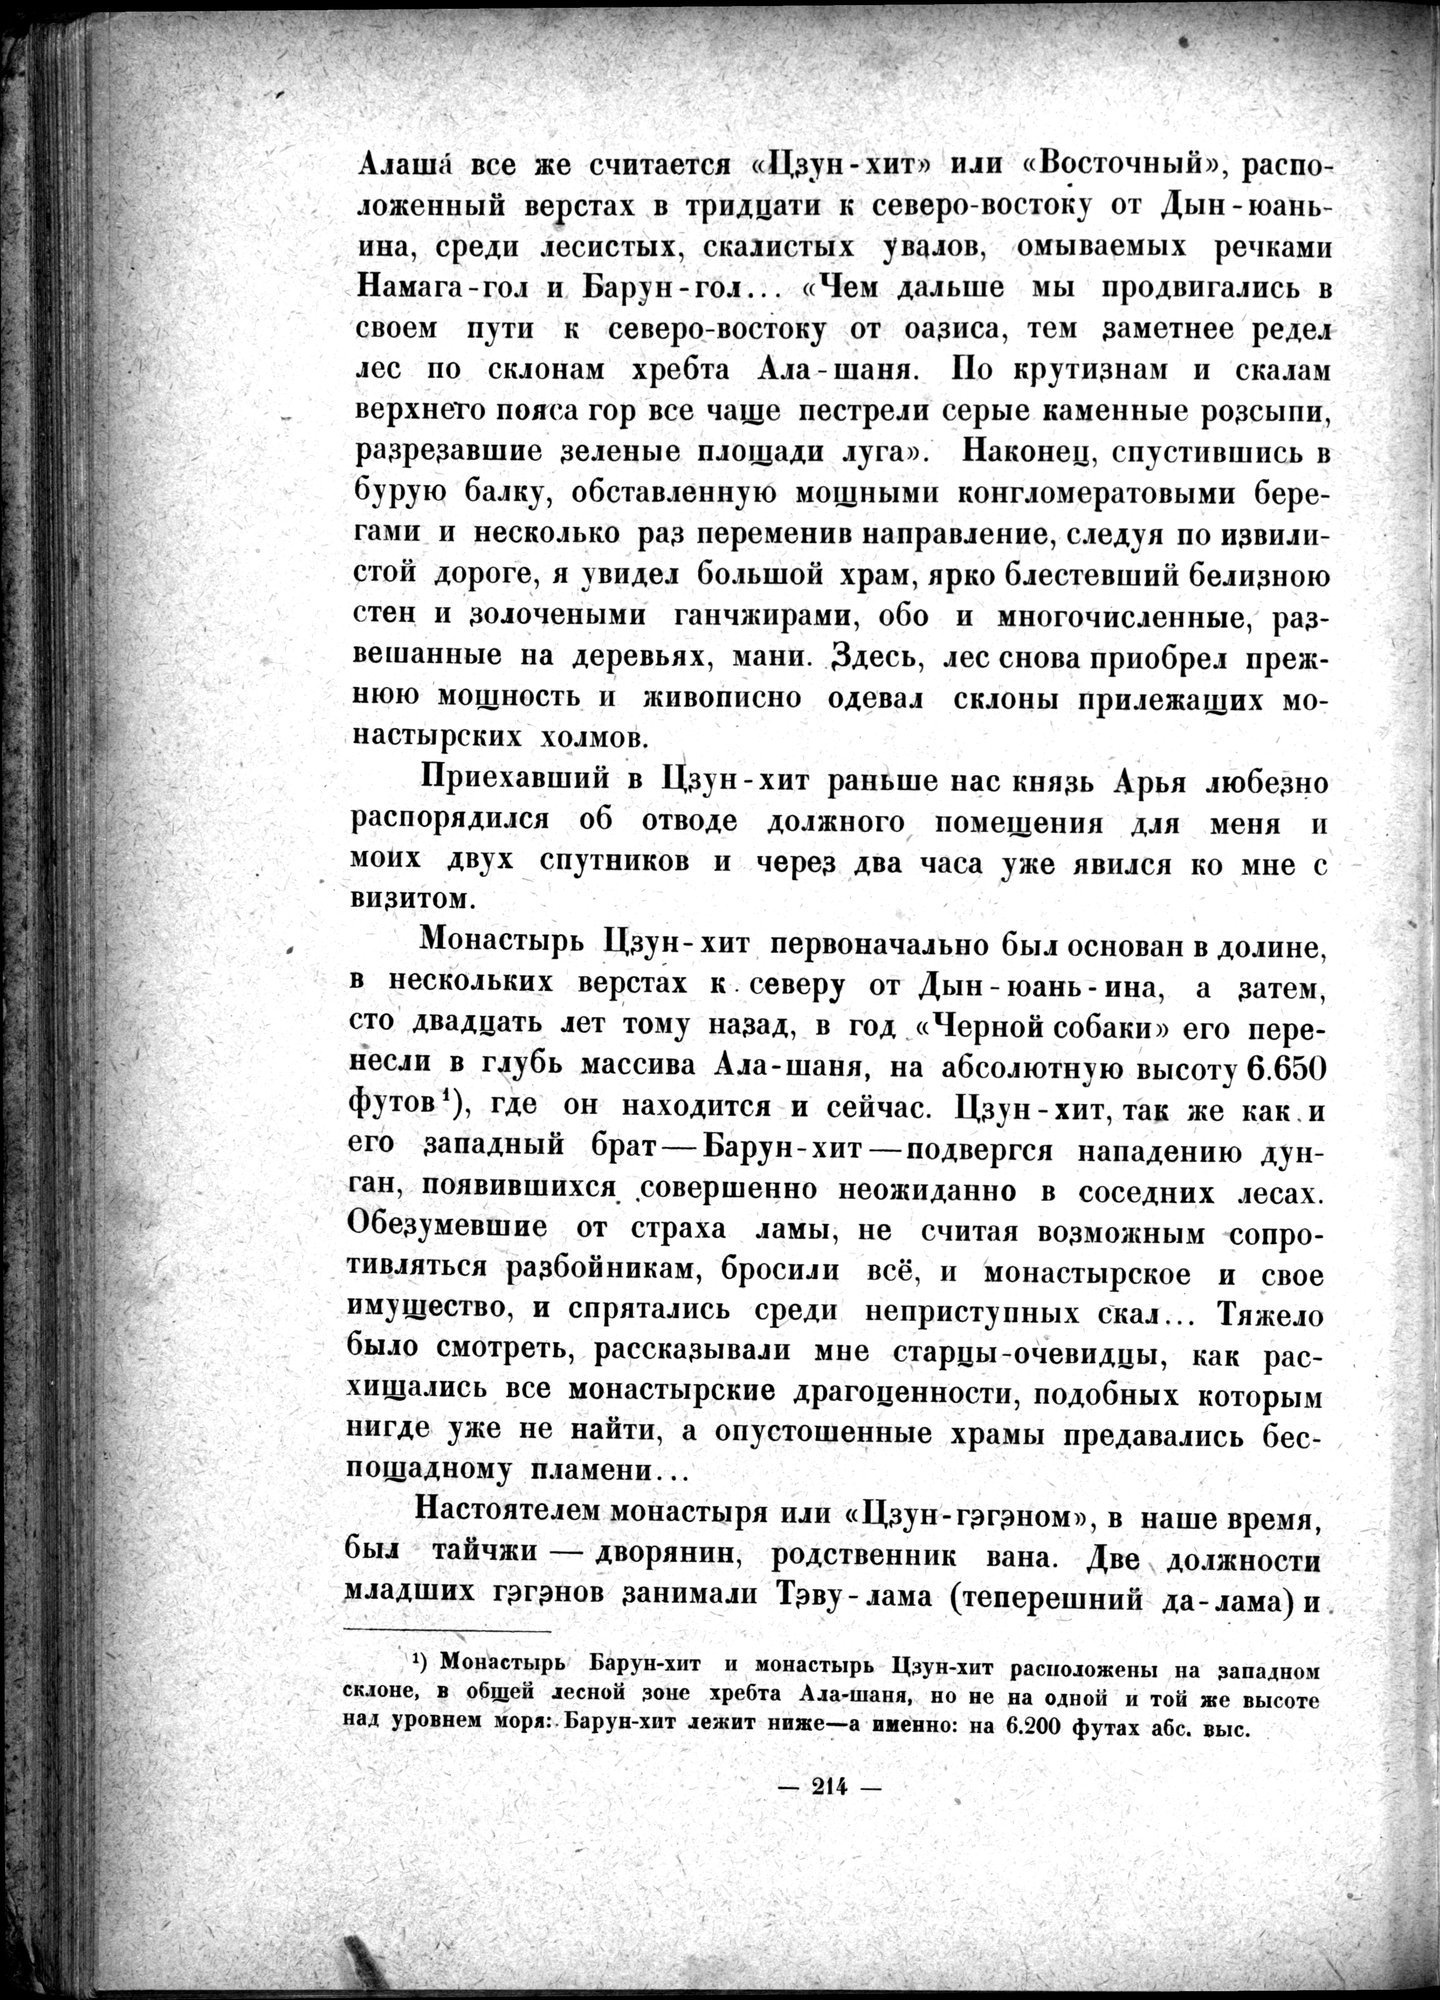 Mongoliya i Amdo i mertby gorod Khara-Khoto : vol.1 / Page 254 (Grayscale High Resolution Image)